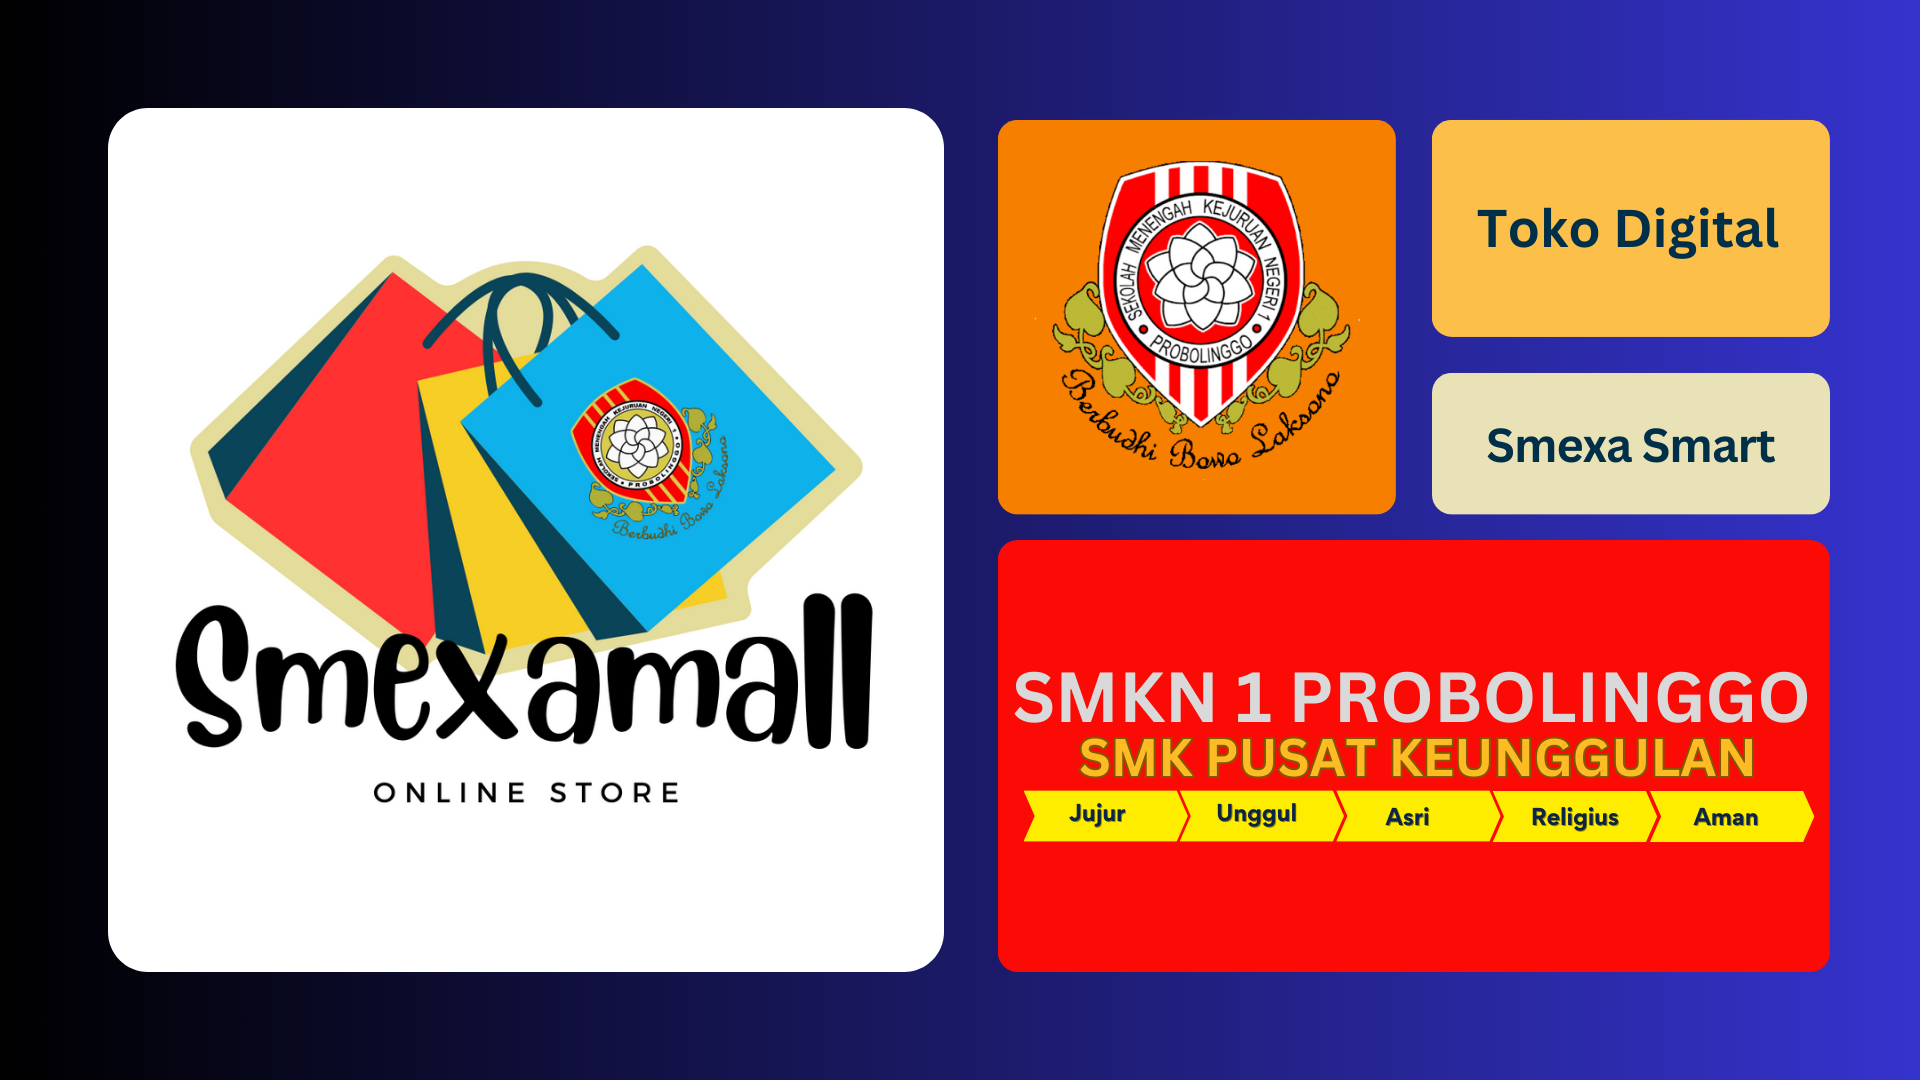 SMKN 1 Probolinggo: Platform Belanja Inovatif dan Edukatif untuk Komunitas SMKN 1 Probolinggo